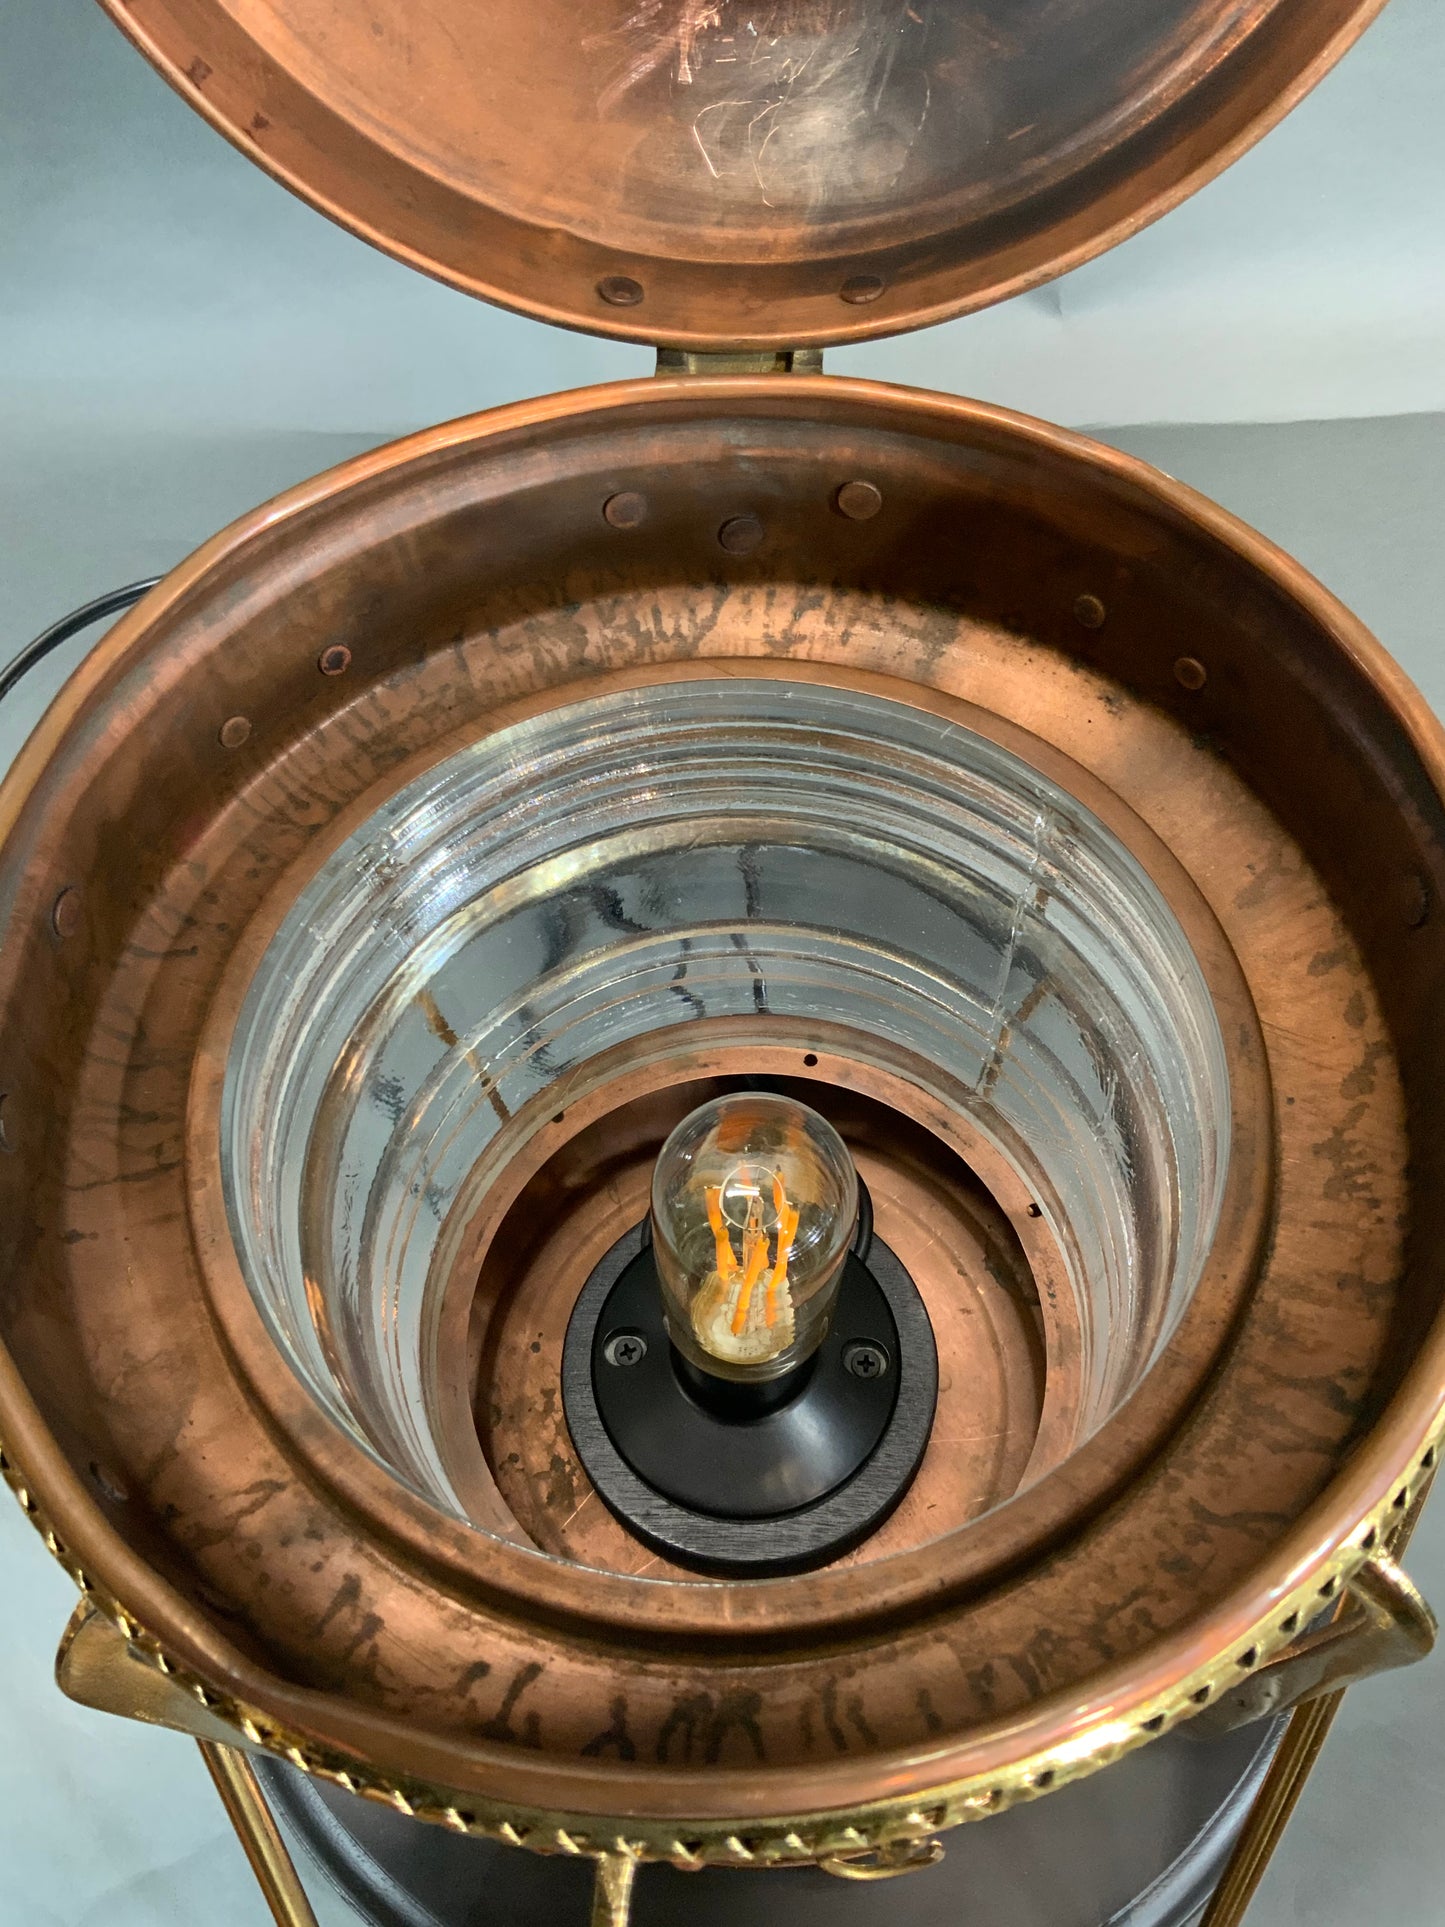 Solid Copper Ships Lantern - Lannan Gallery